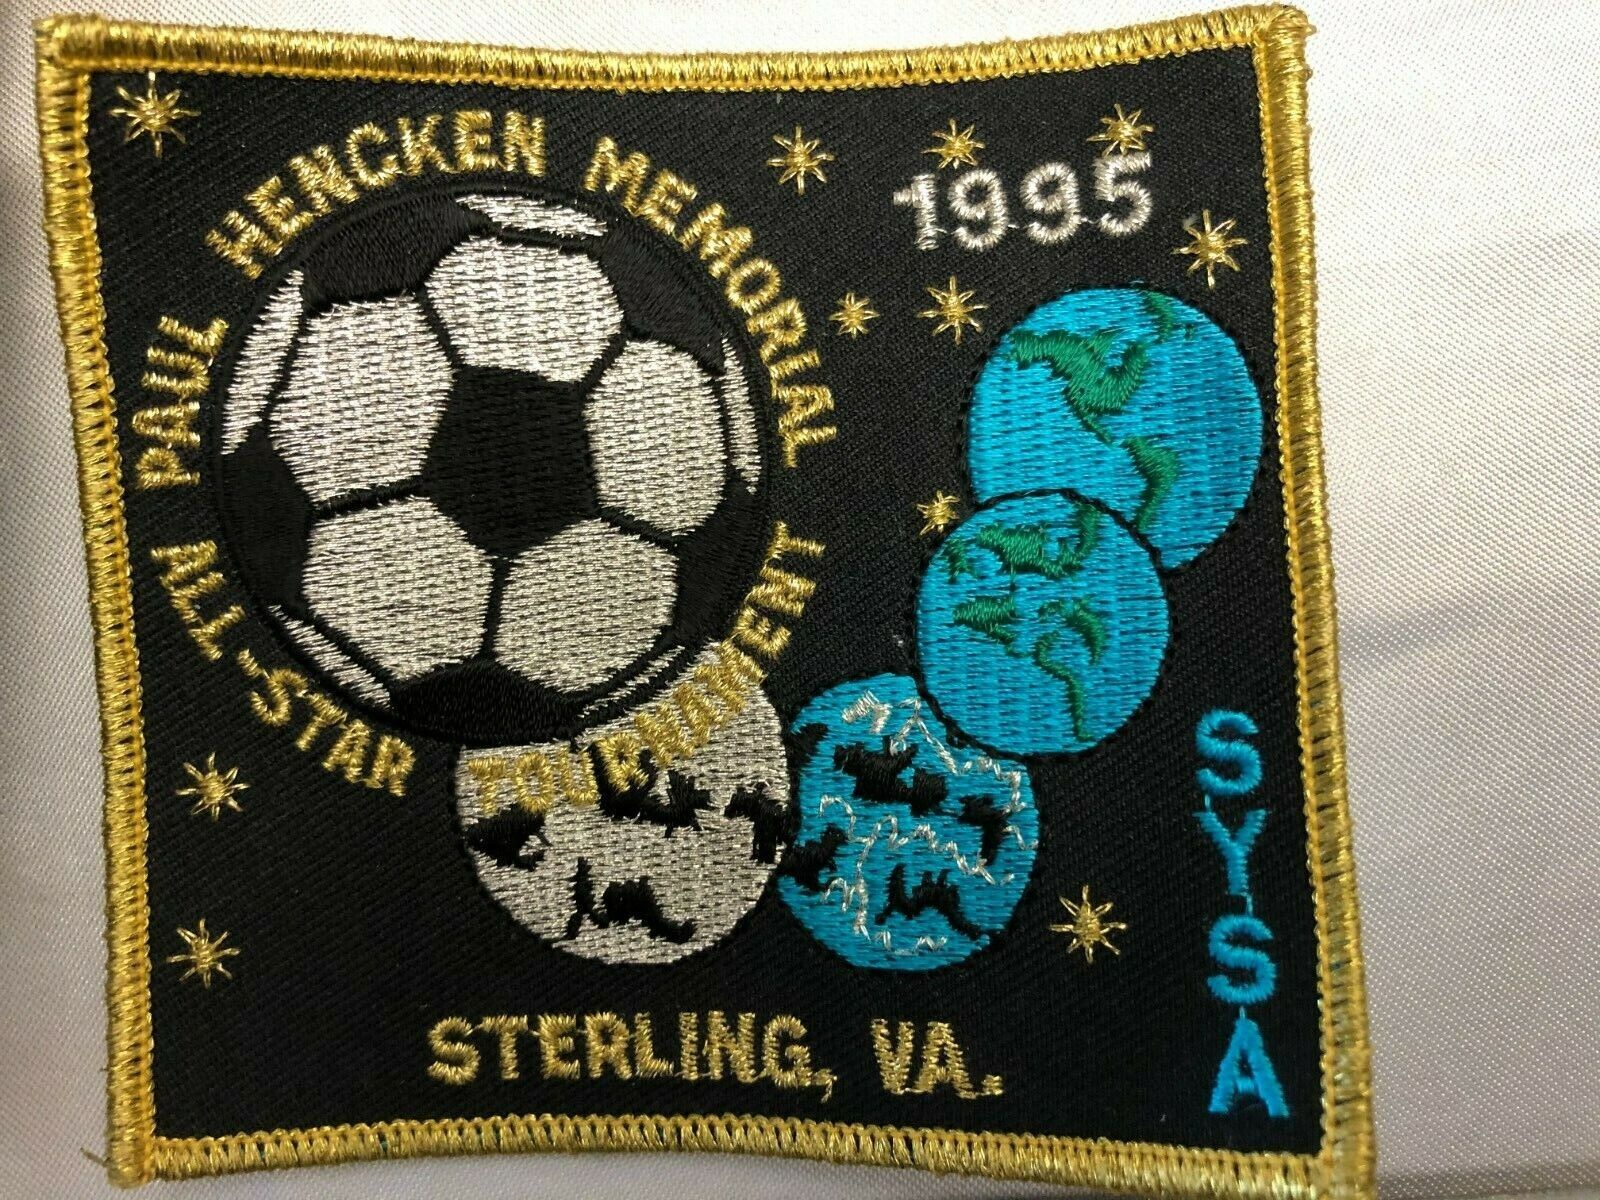 Vintage Lot 24 Soccer Patch Patches BRYC All Star Paul Hencken Fairfax Annandale Без бренда - фотография #11